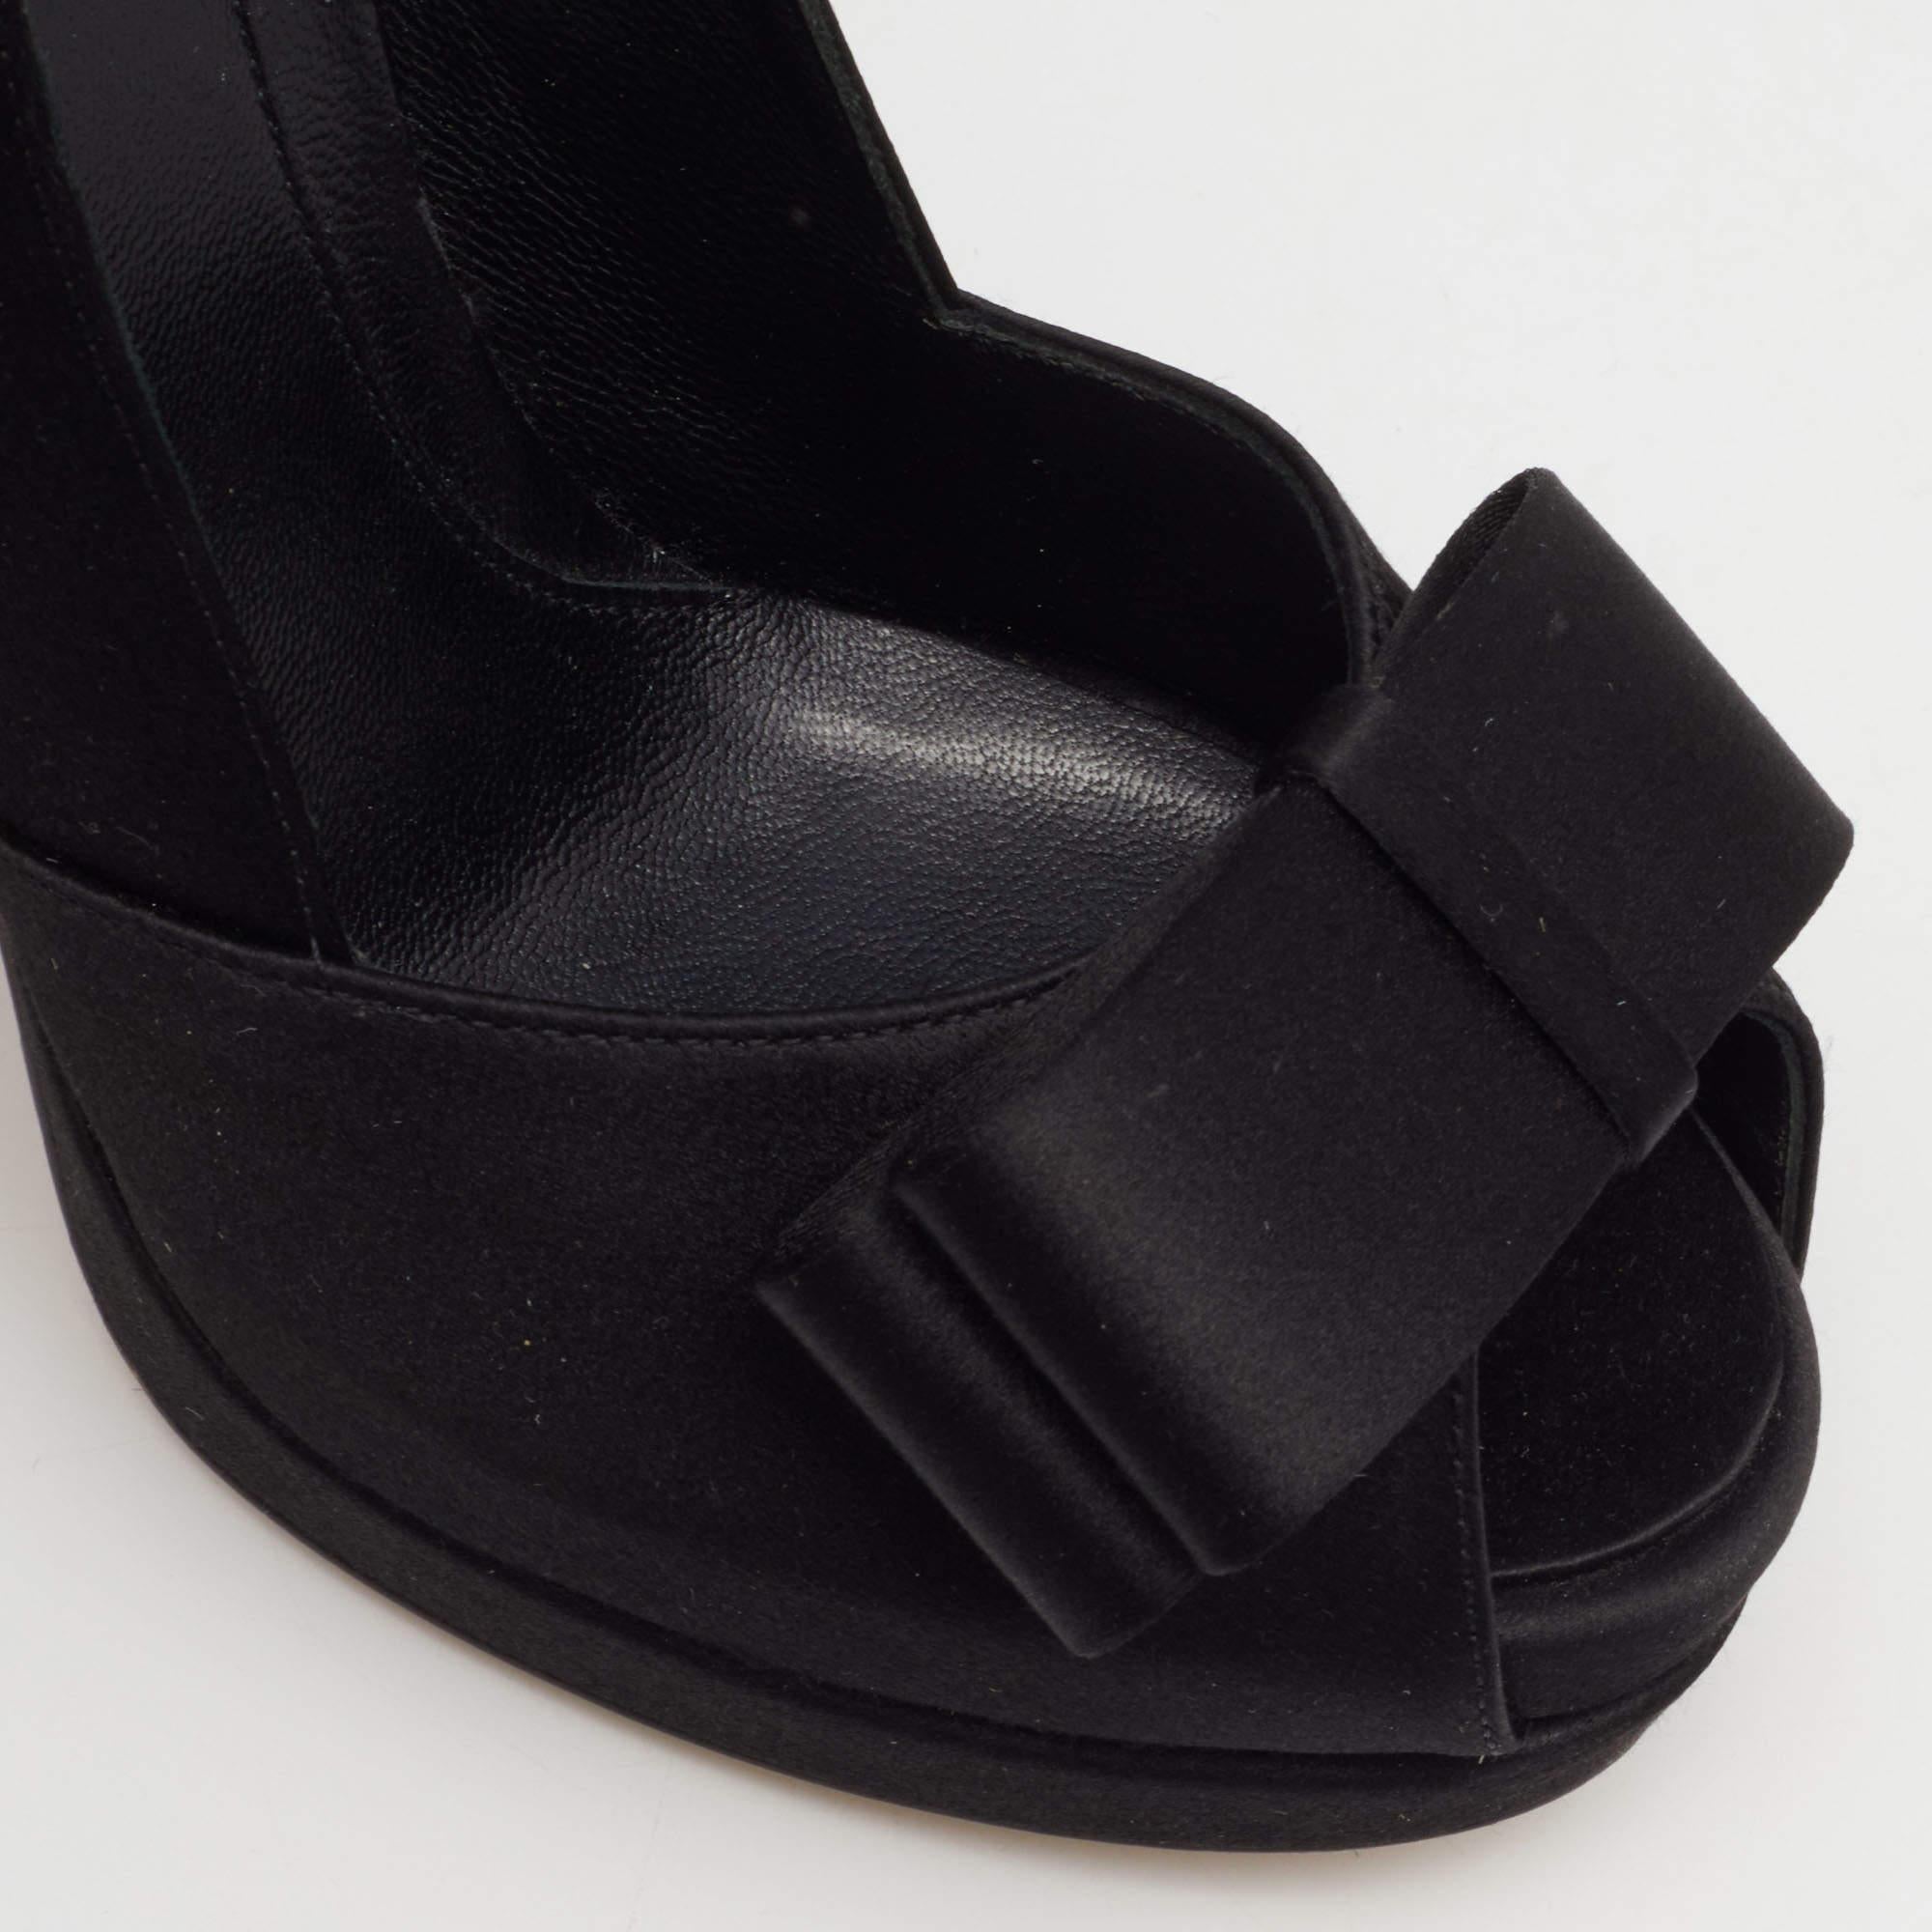 Fendi Black Satin Bow Peep Toe Platform Pumps Size 37 2